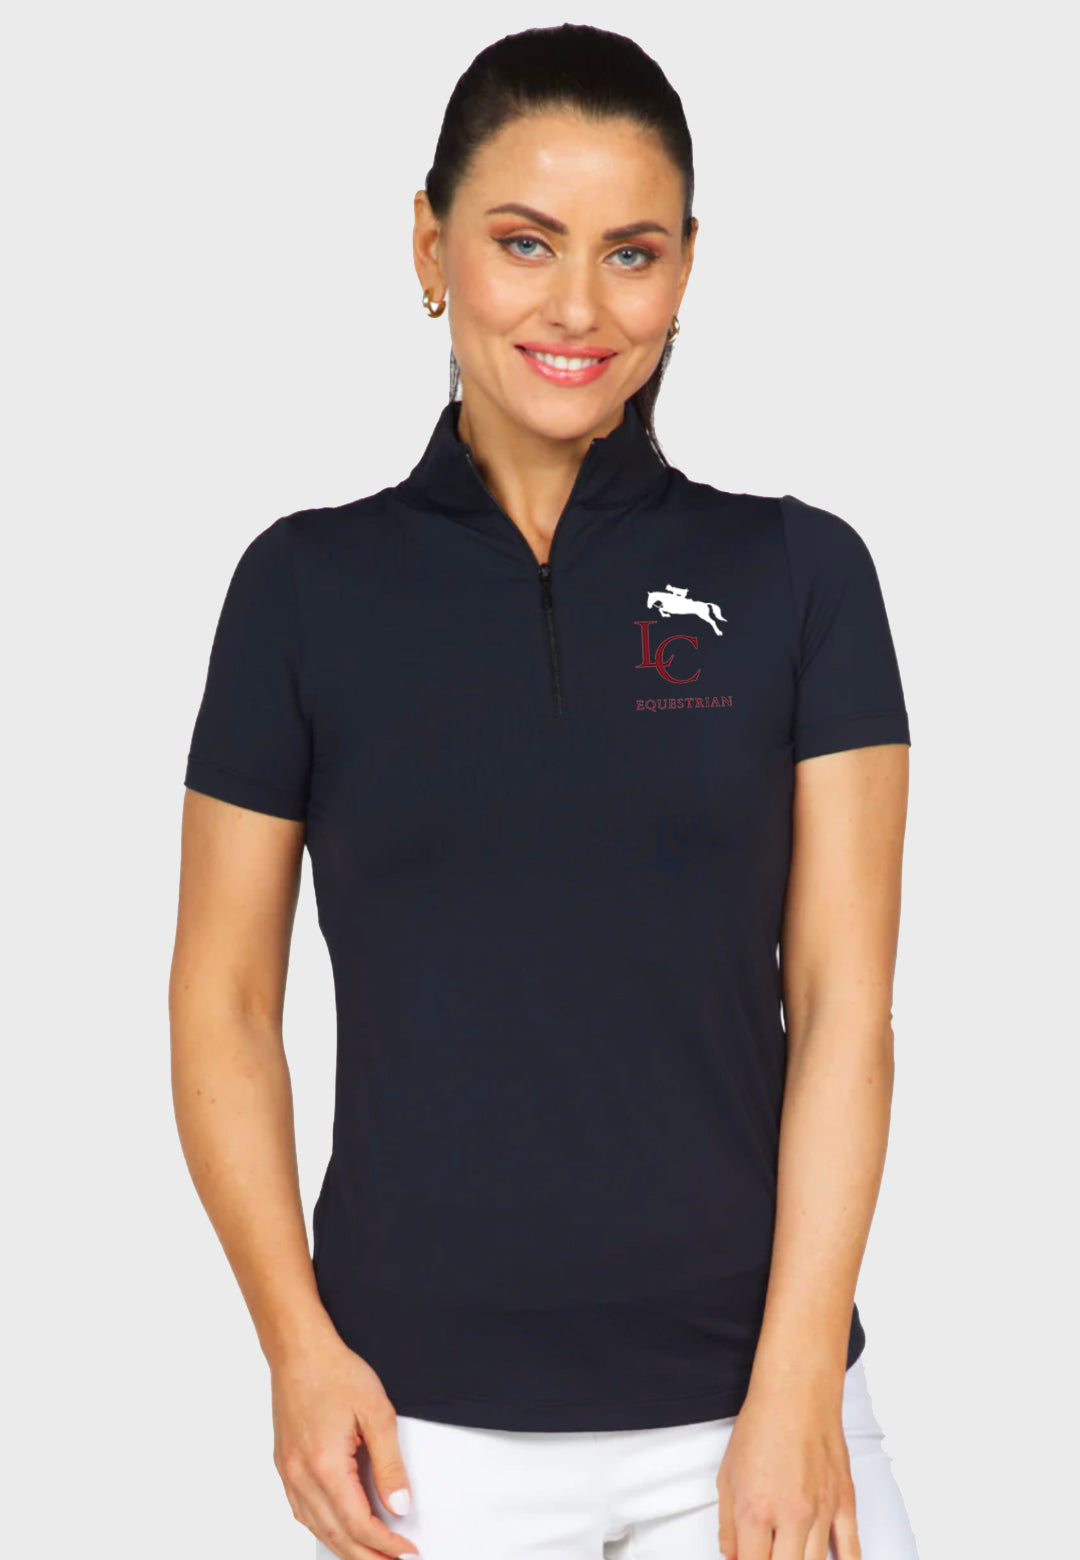 Loomis Chaffee Equestrian IBKÜL® Ladies Short Sleeve Sun Shirt - 2 Color Options